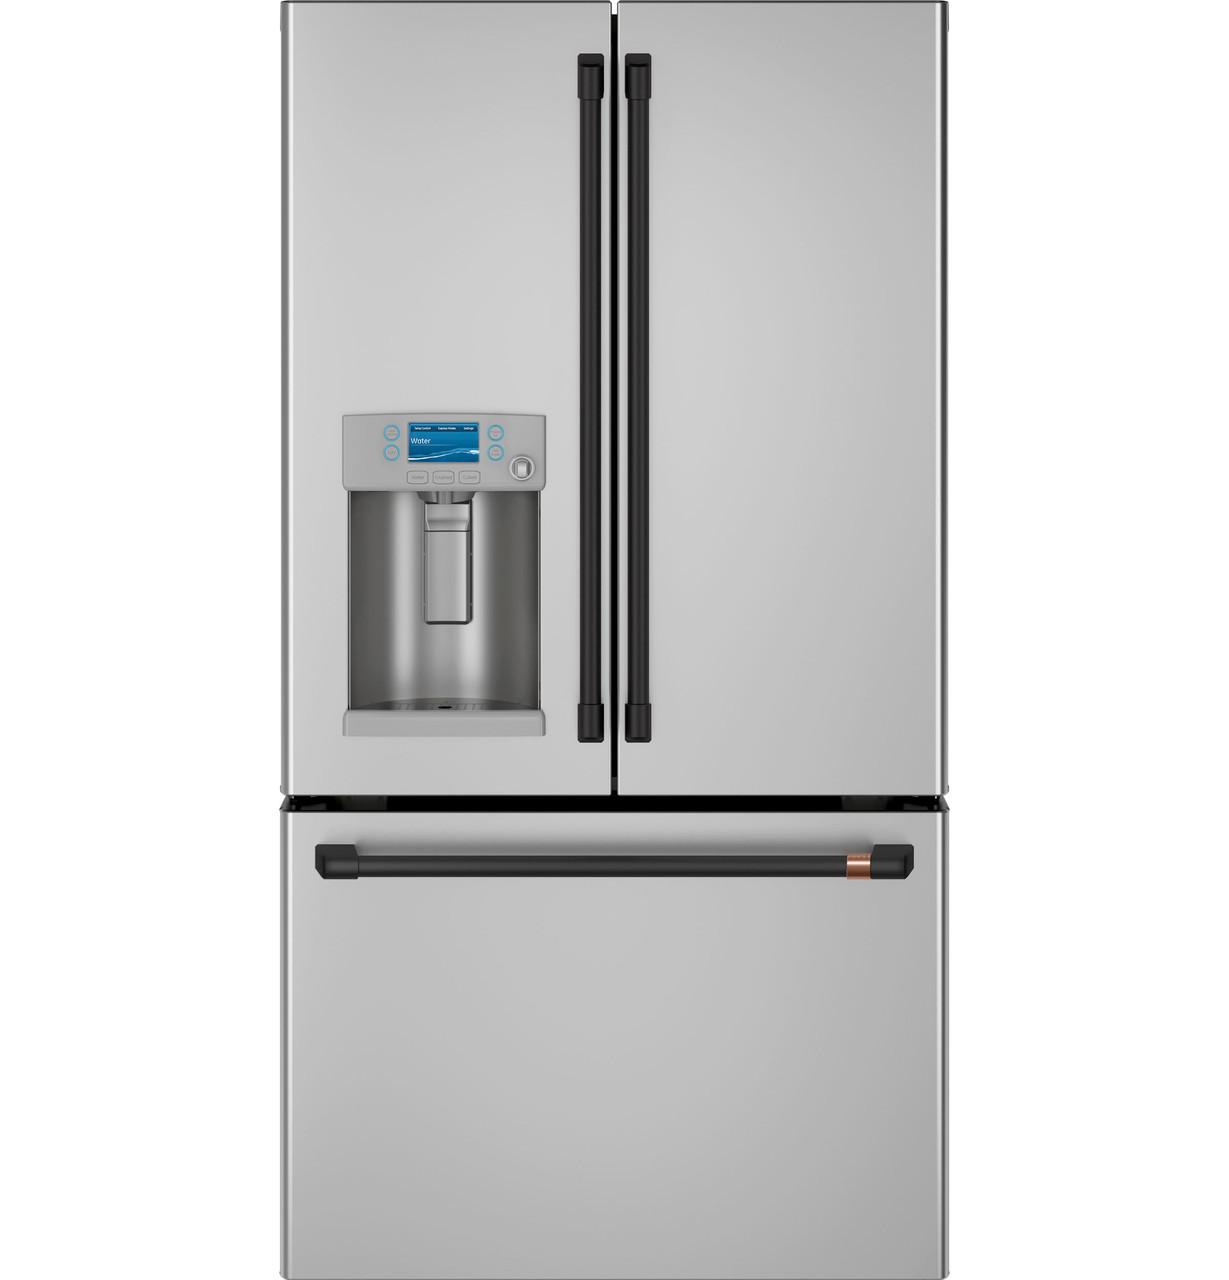 Cafe Caf(eback)™ ENERGY STAR® 22.1 Cu. Ft. Smart Counter-Depth French-Door Refrigerator with Hot Water Dispenser